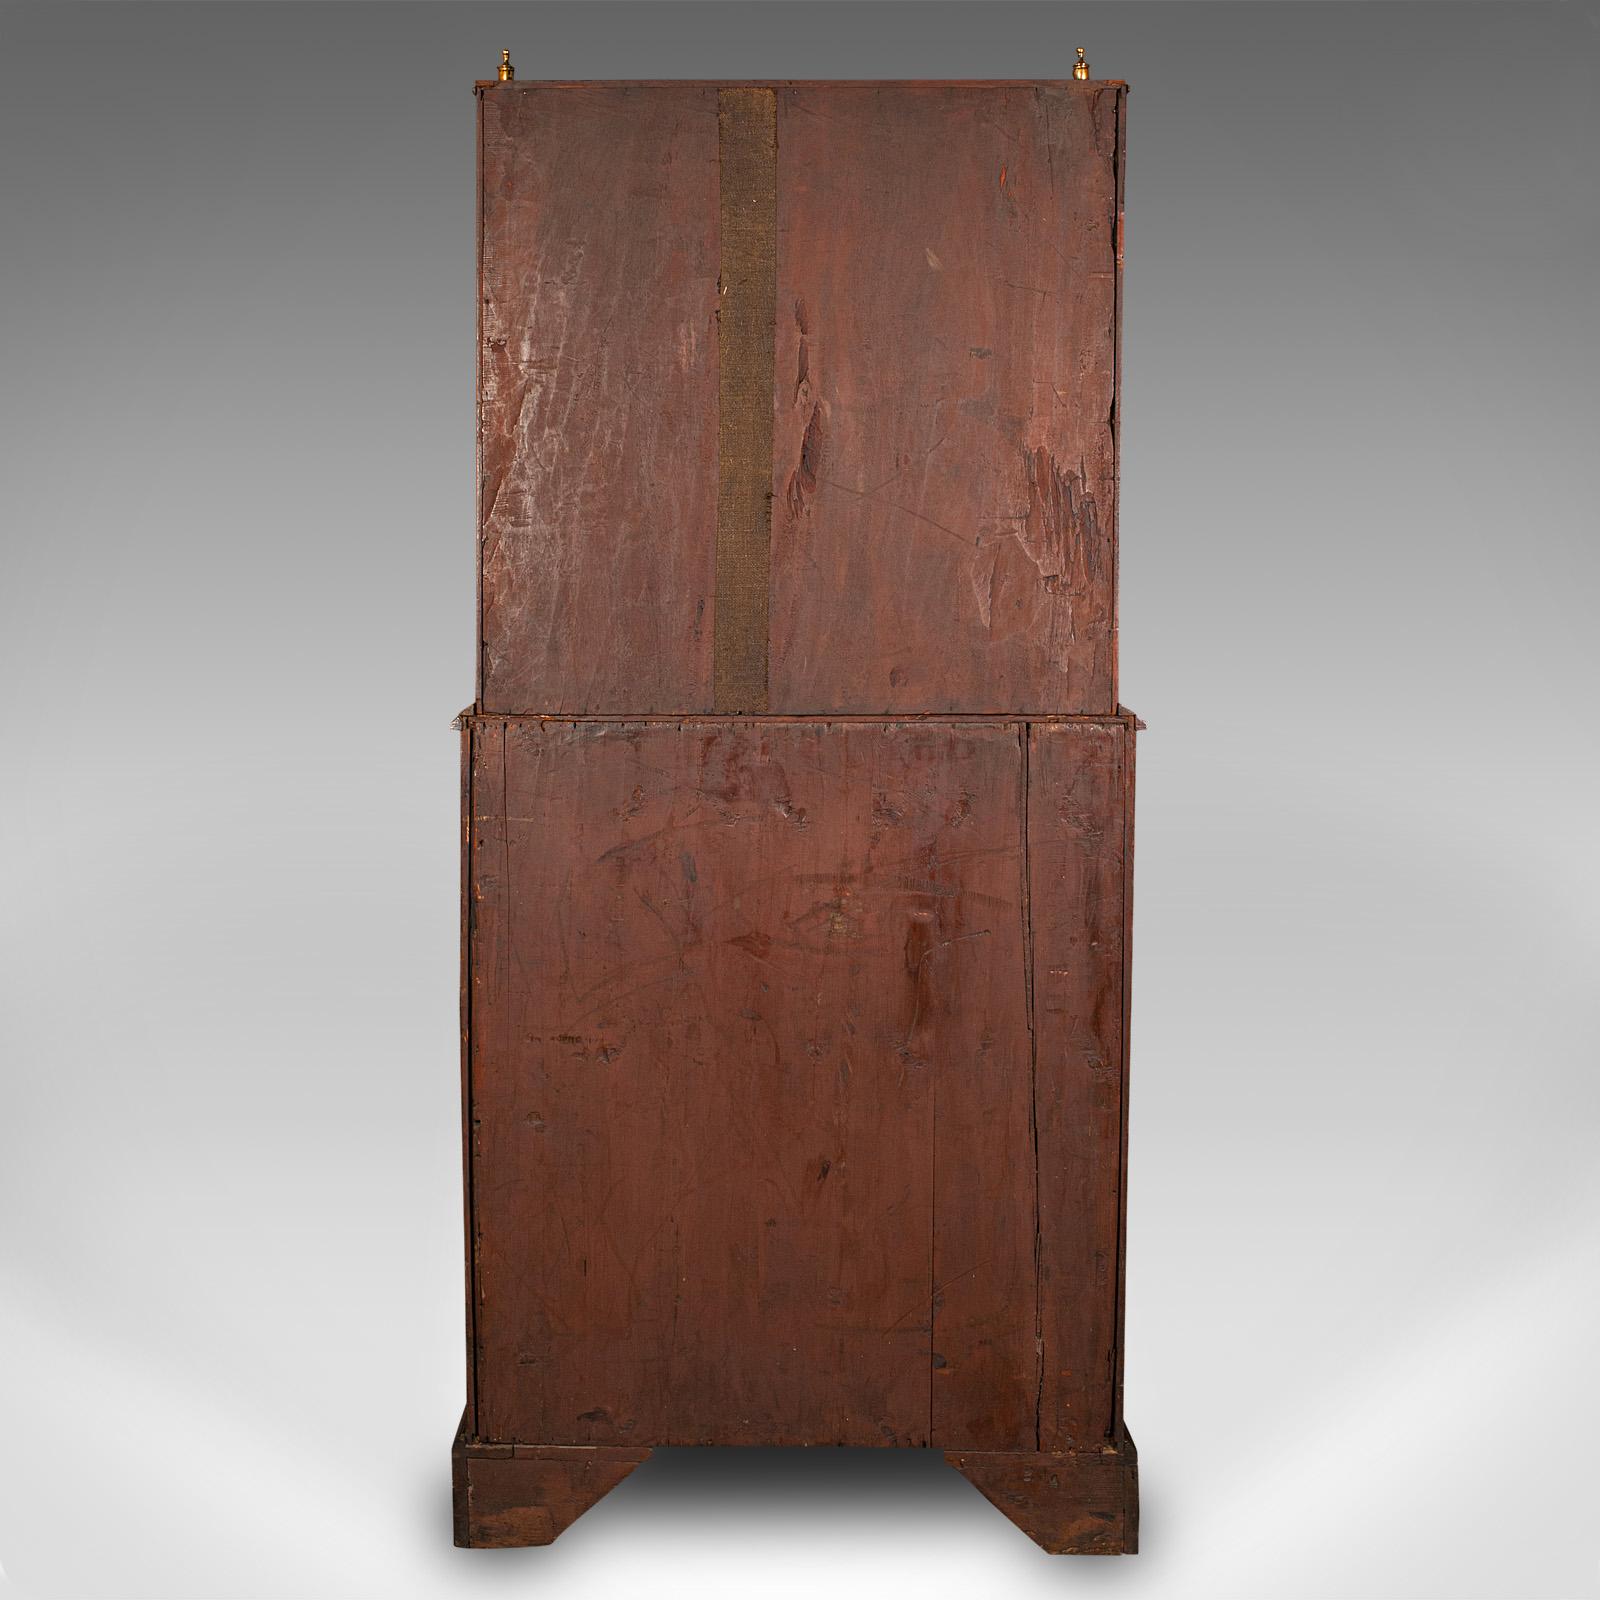 Wood Antique Author's Chest, English, Secretaire Cabinet, Glazed Bookcase, Georgian